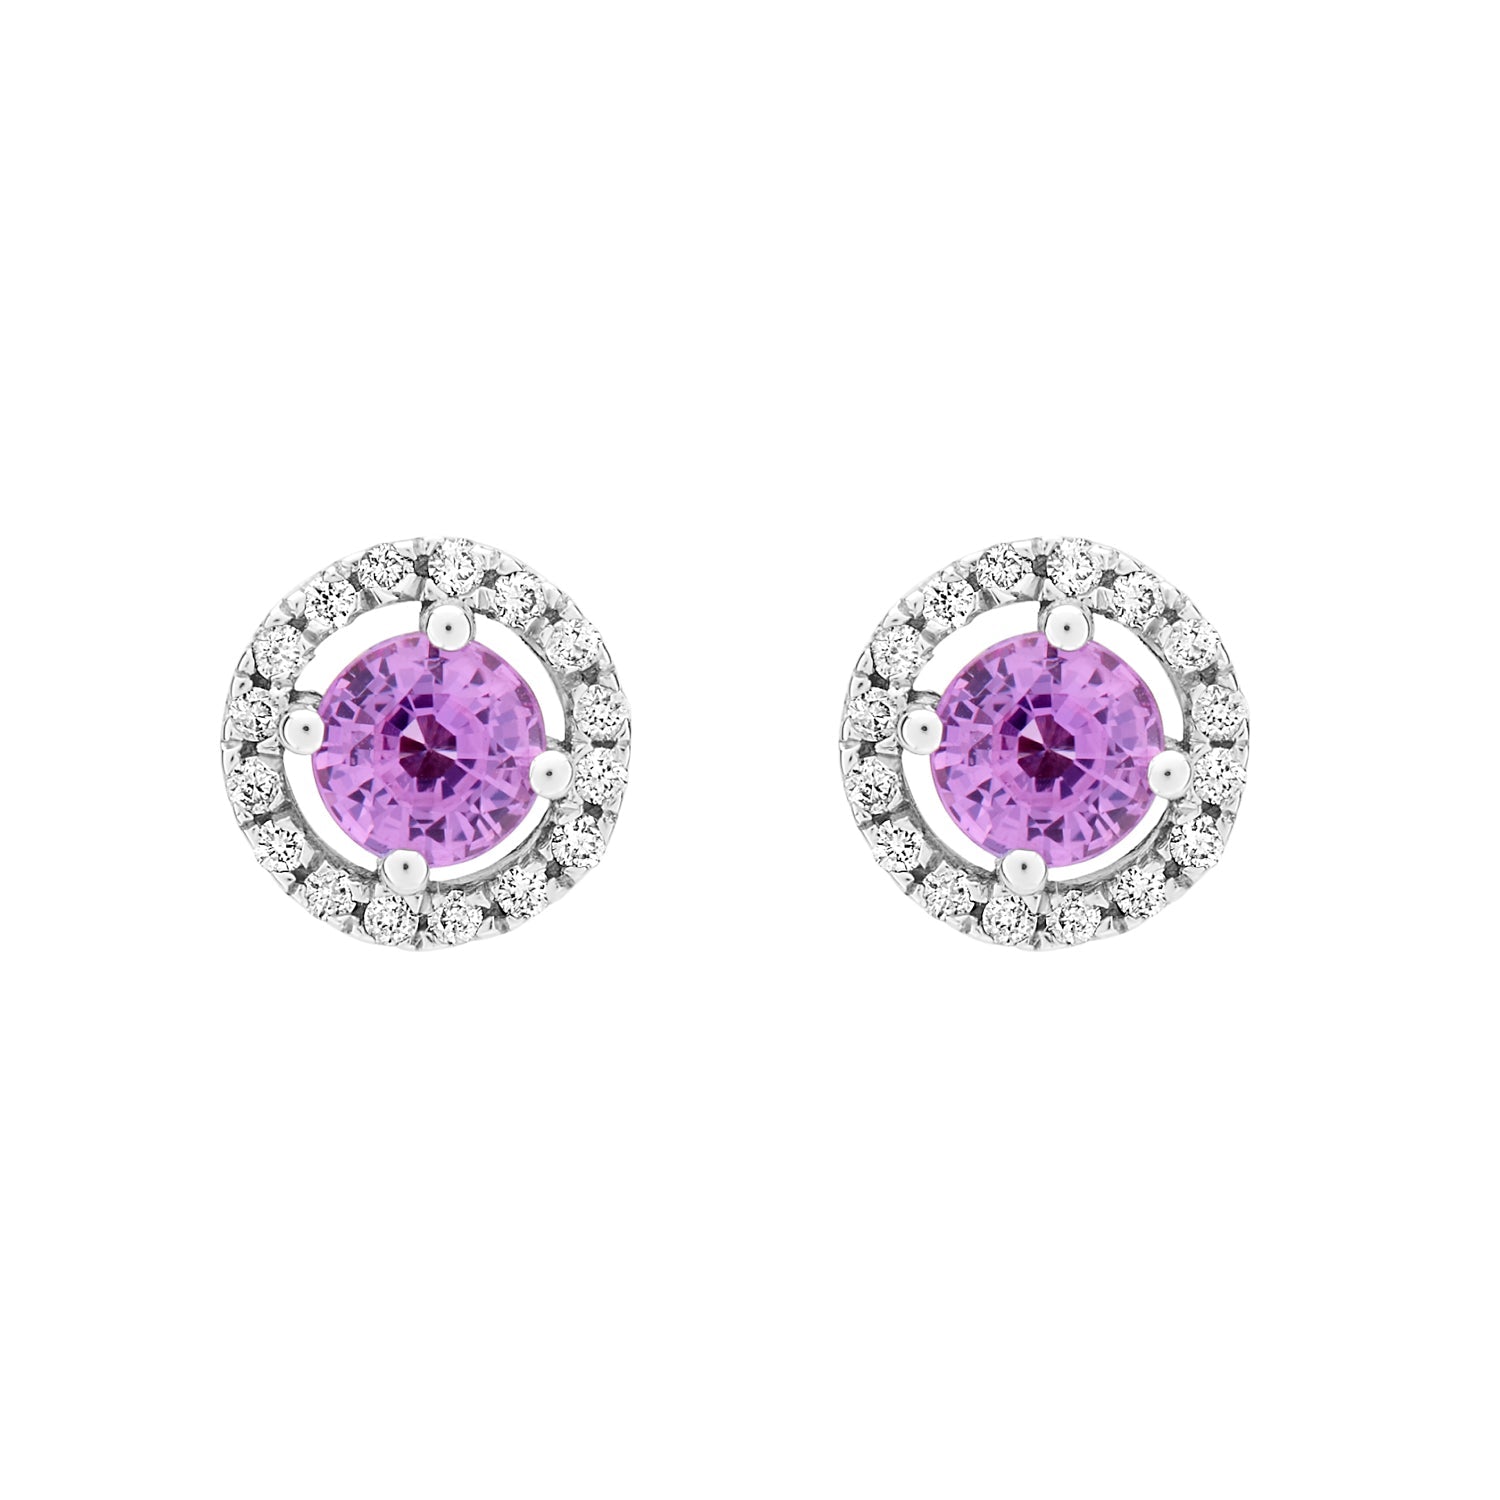 Diamond and Gemstone Halo Earrings. 0.18ct